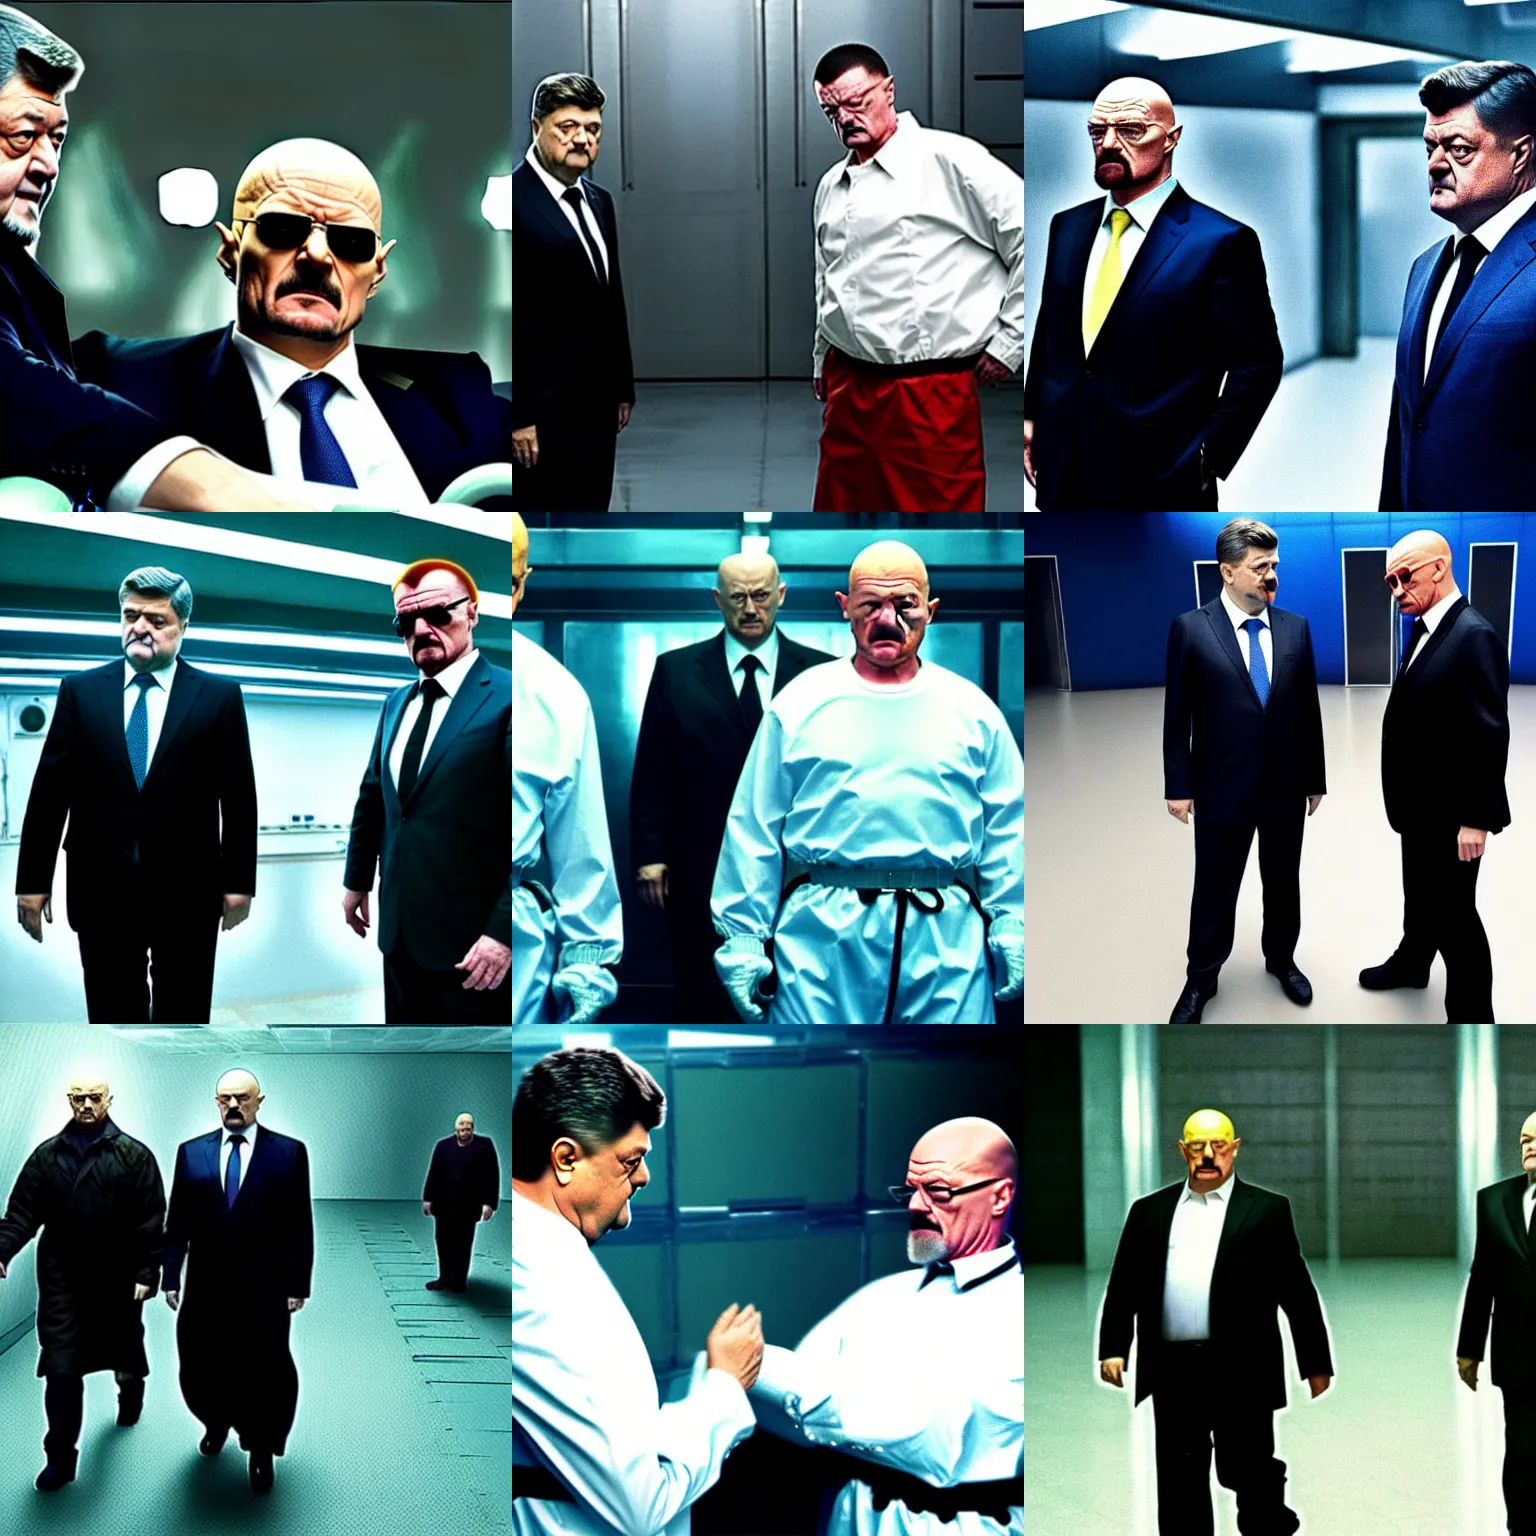 Prompt: poroshenko and walter white in matrix movie